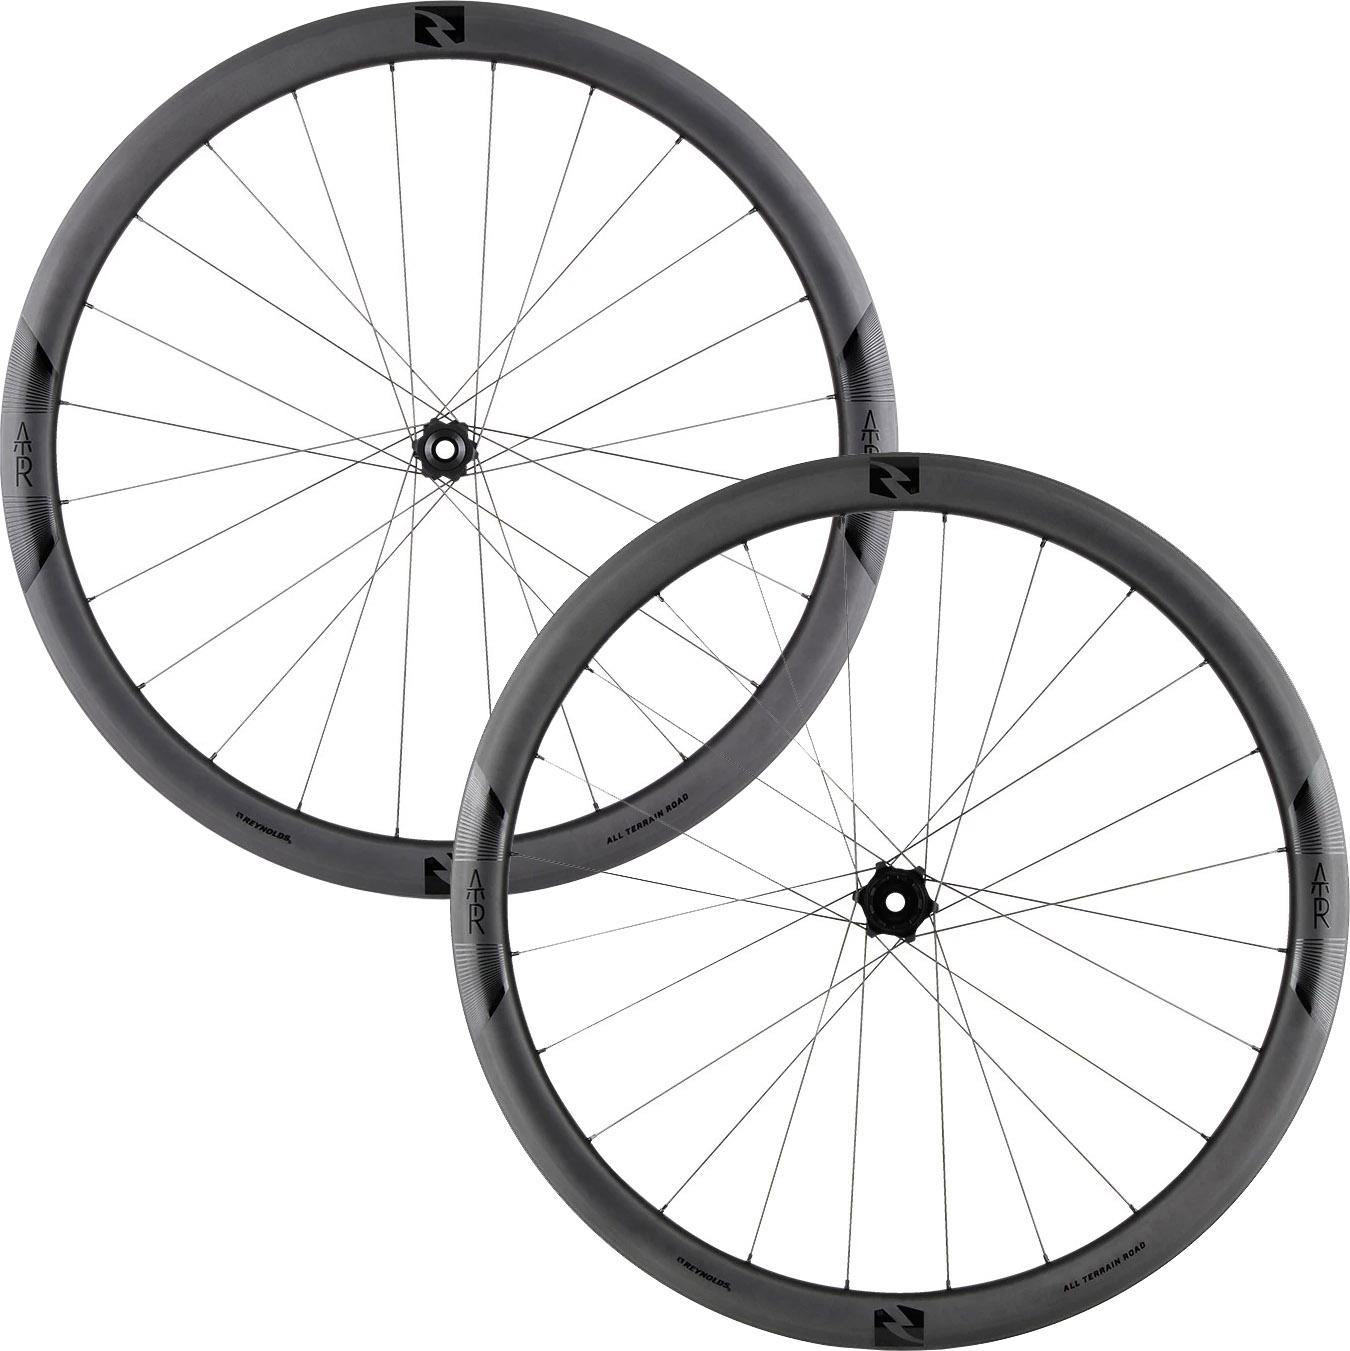 Reynolds Atr X Carbon Disc Gravel Wheelset - Black